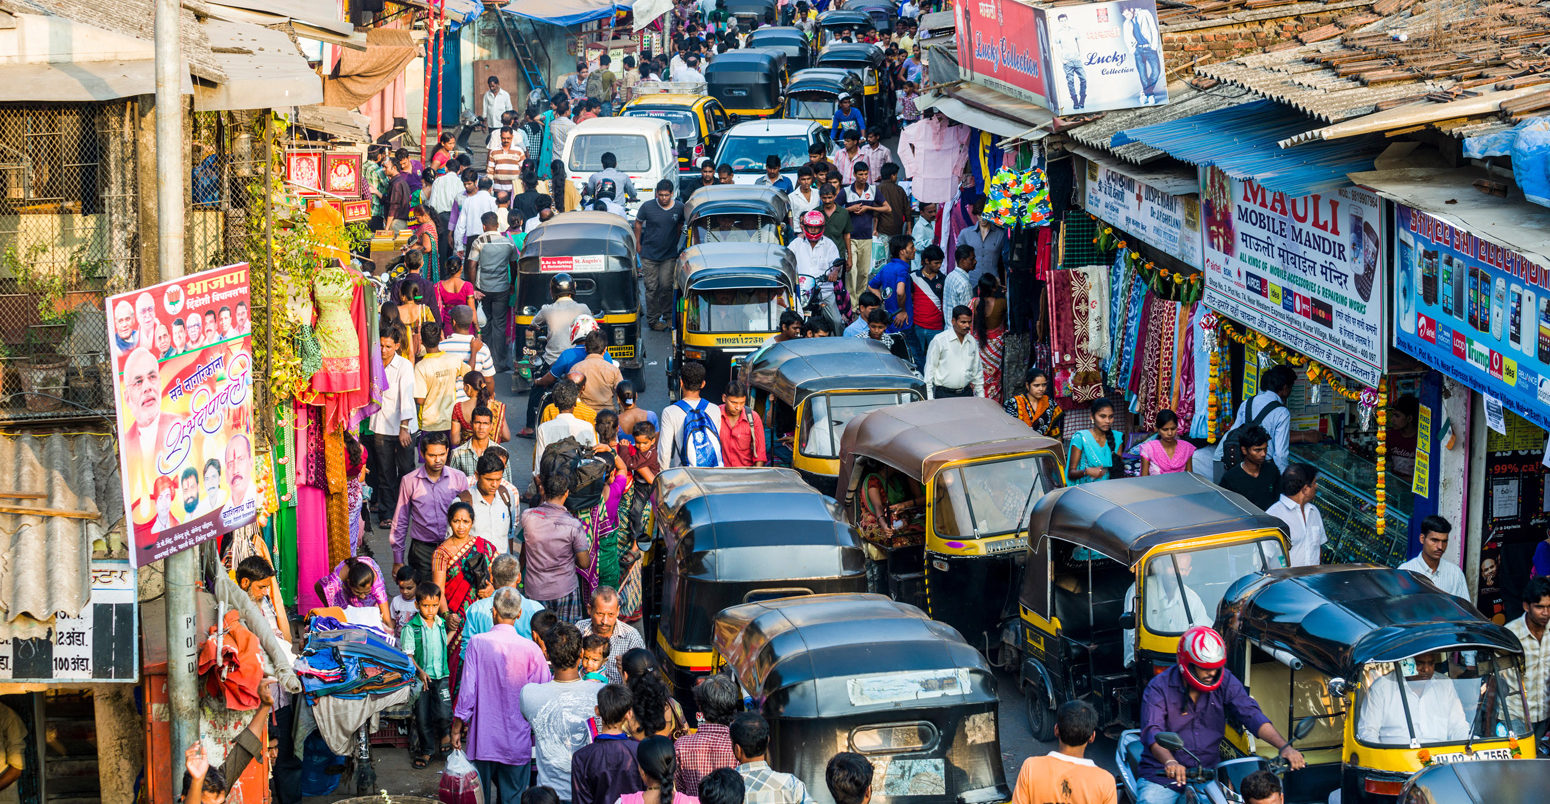 Roadblock in busy market area of Mumbai, India. Credit: Frank Bienewald / Alamy Stock Photo